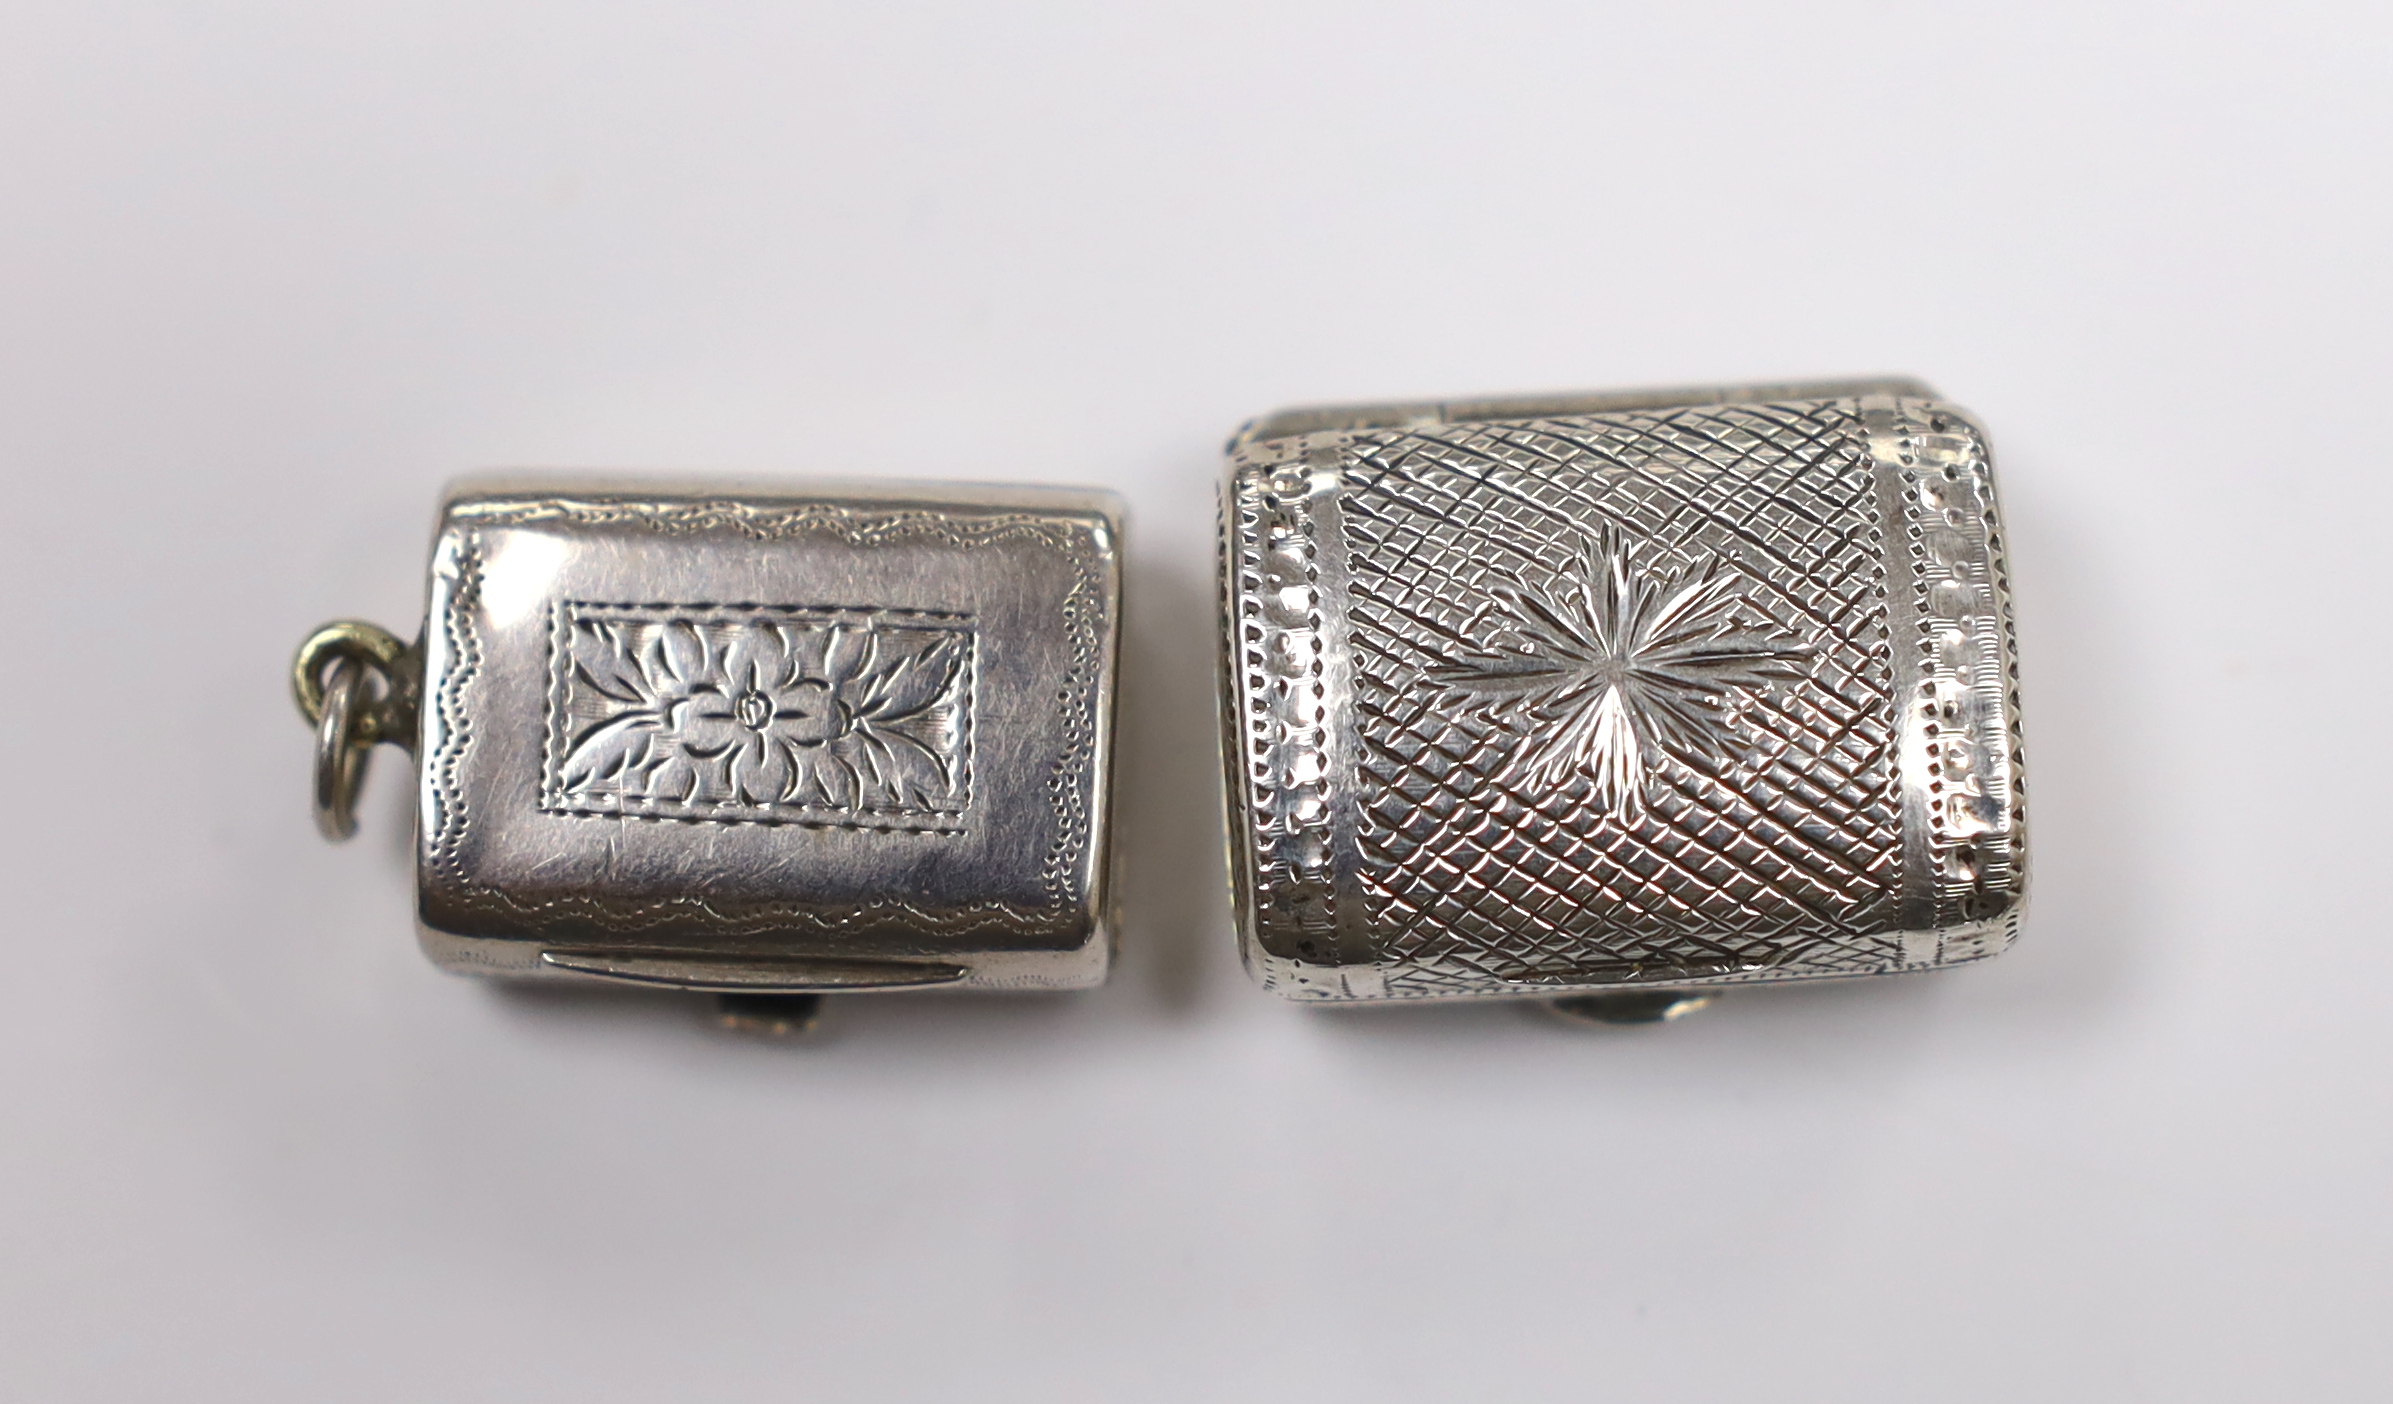 Two 19th century engraved silver vinaigrettes, modelled as satchels, John Lawrence & Co, Birmingham, 1817 and Thomas Simpson?, Birmingham, 1831, largest 24mm.